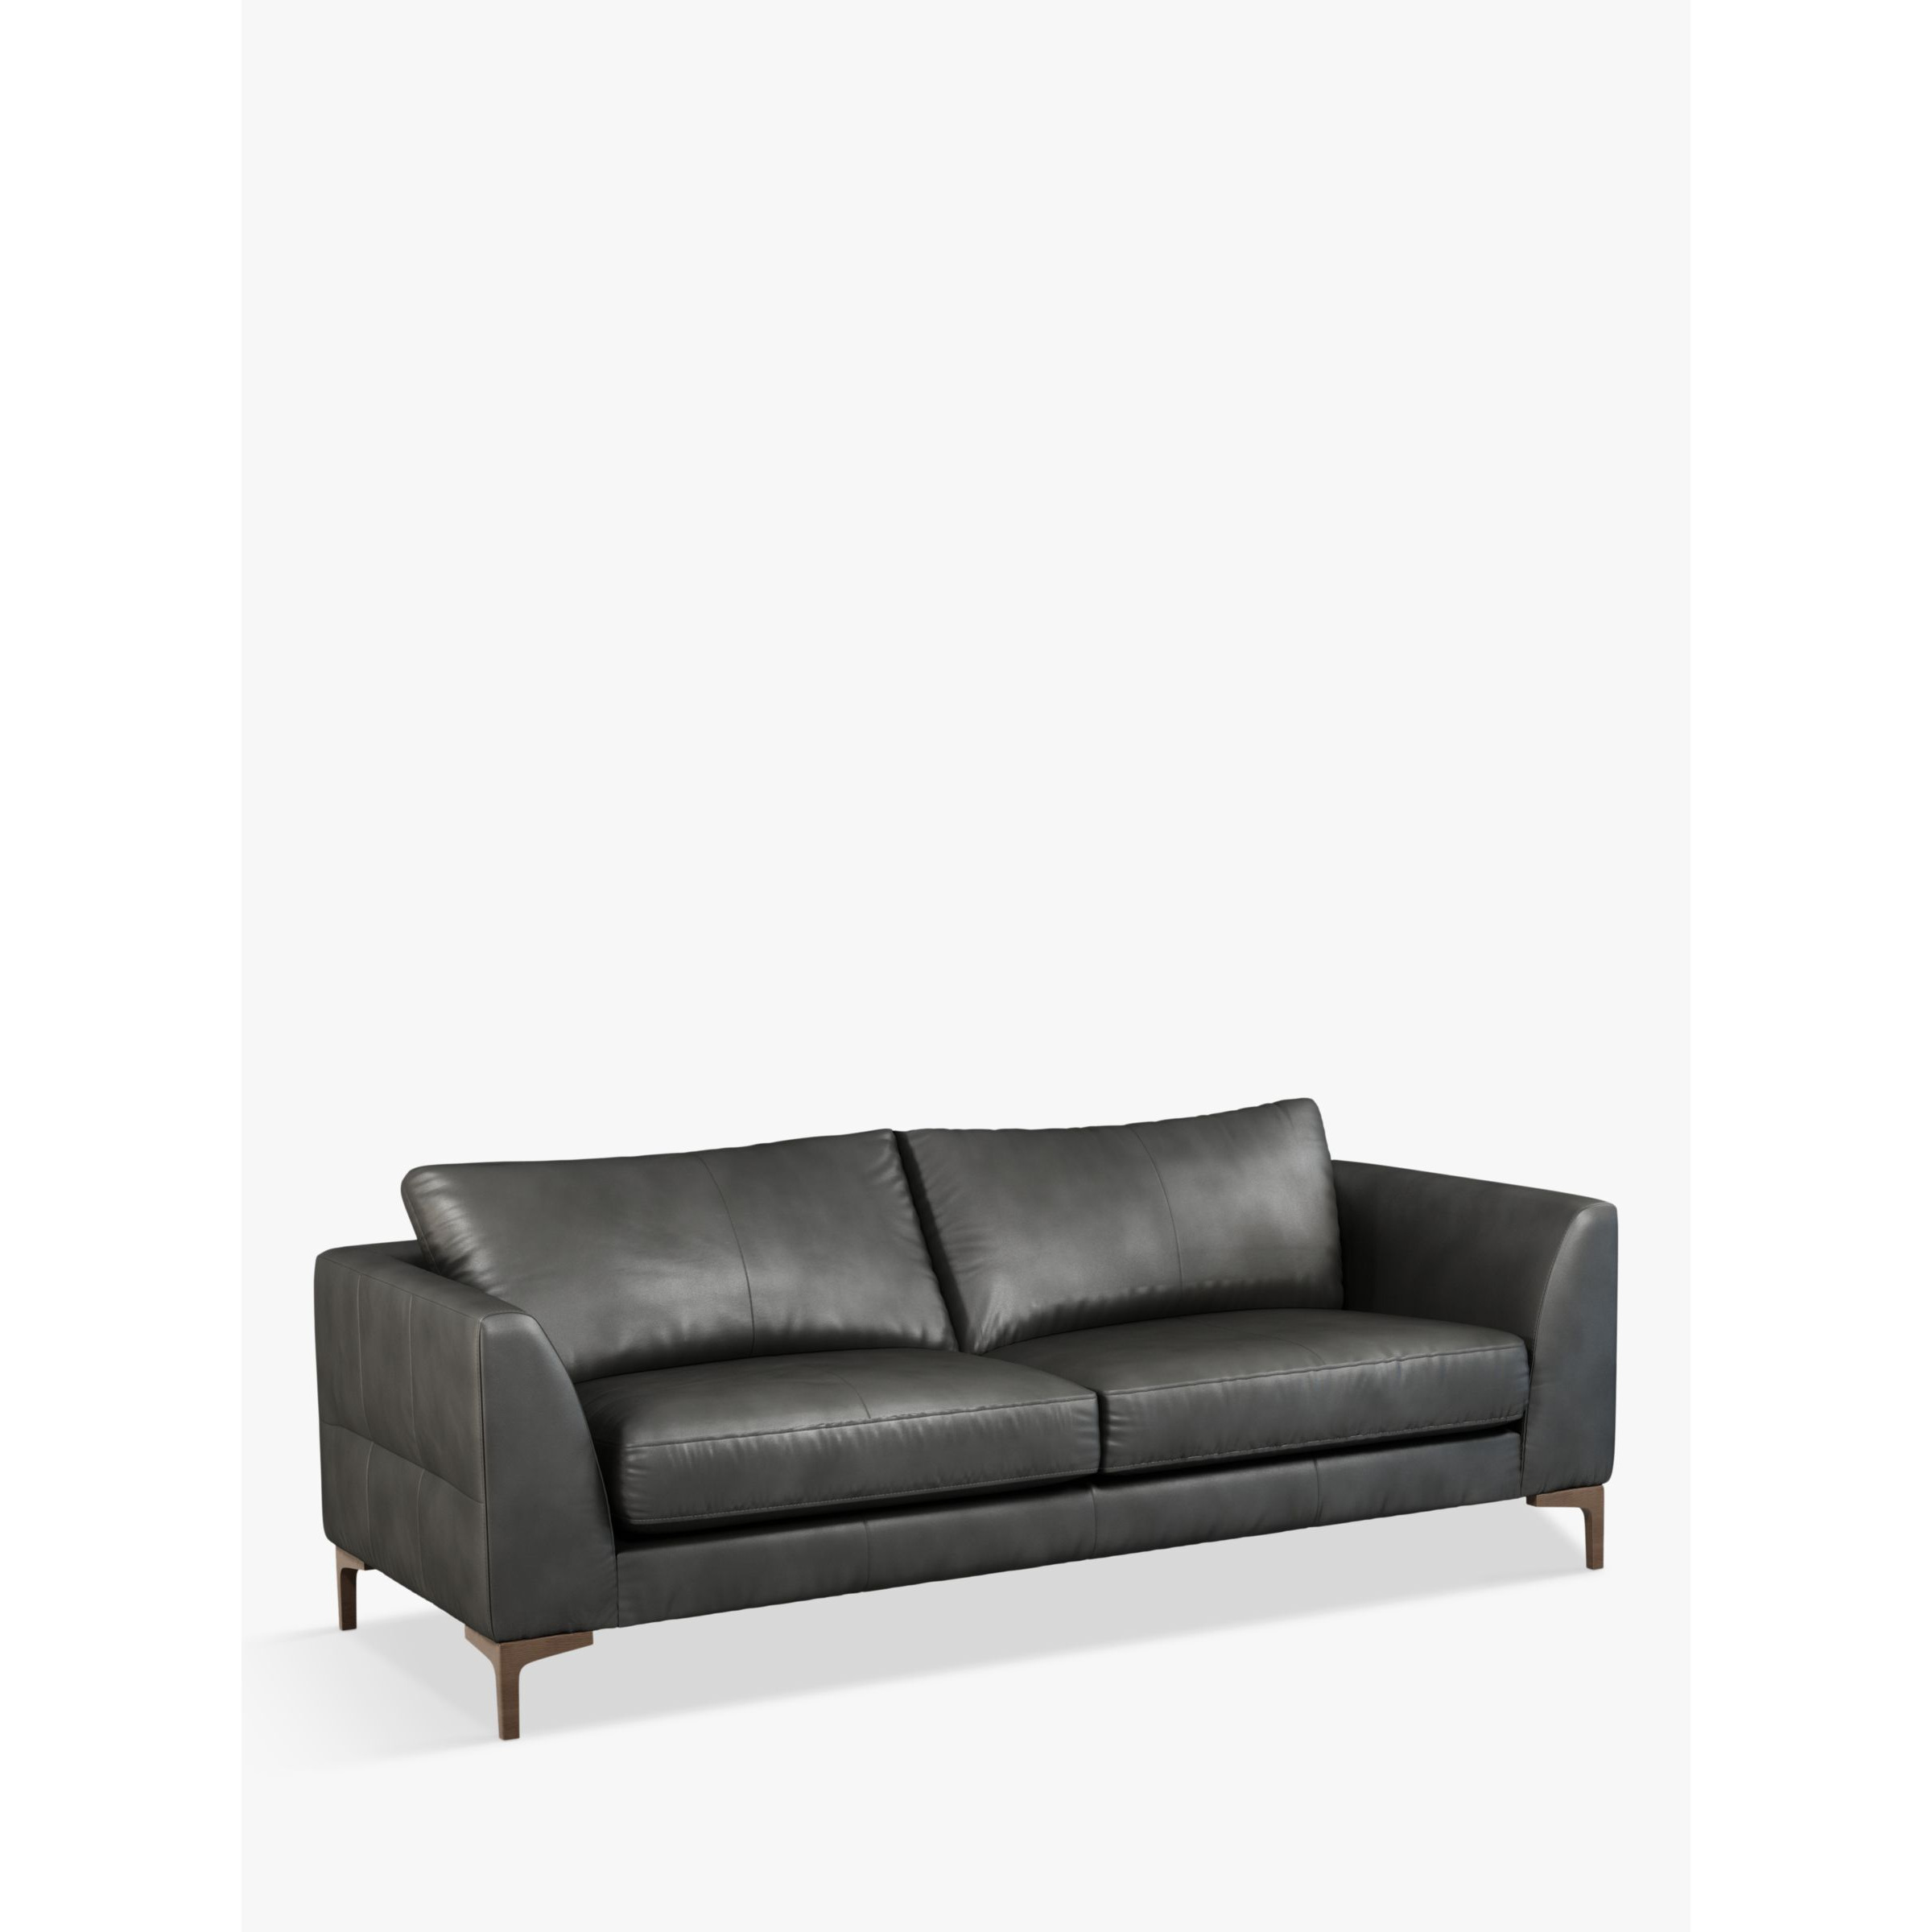 John Lewis Belgrave Grand 4 Seater Leather Sofa, Dark Leg - image 1